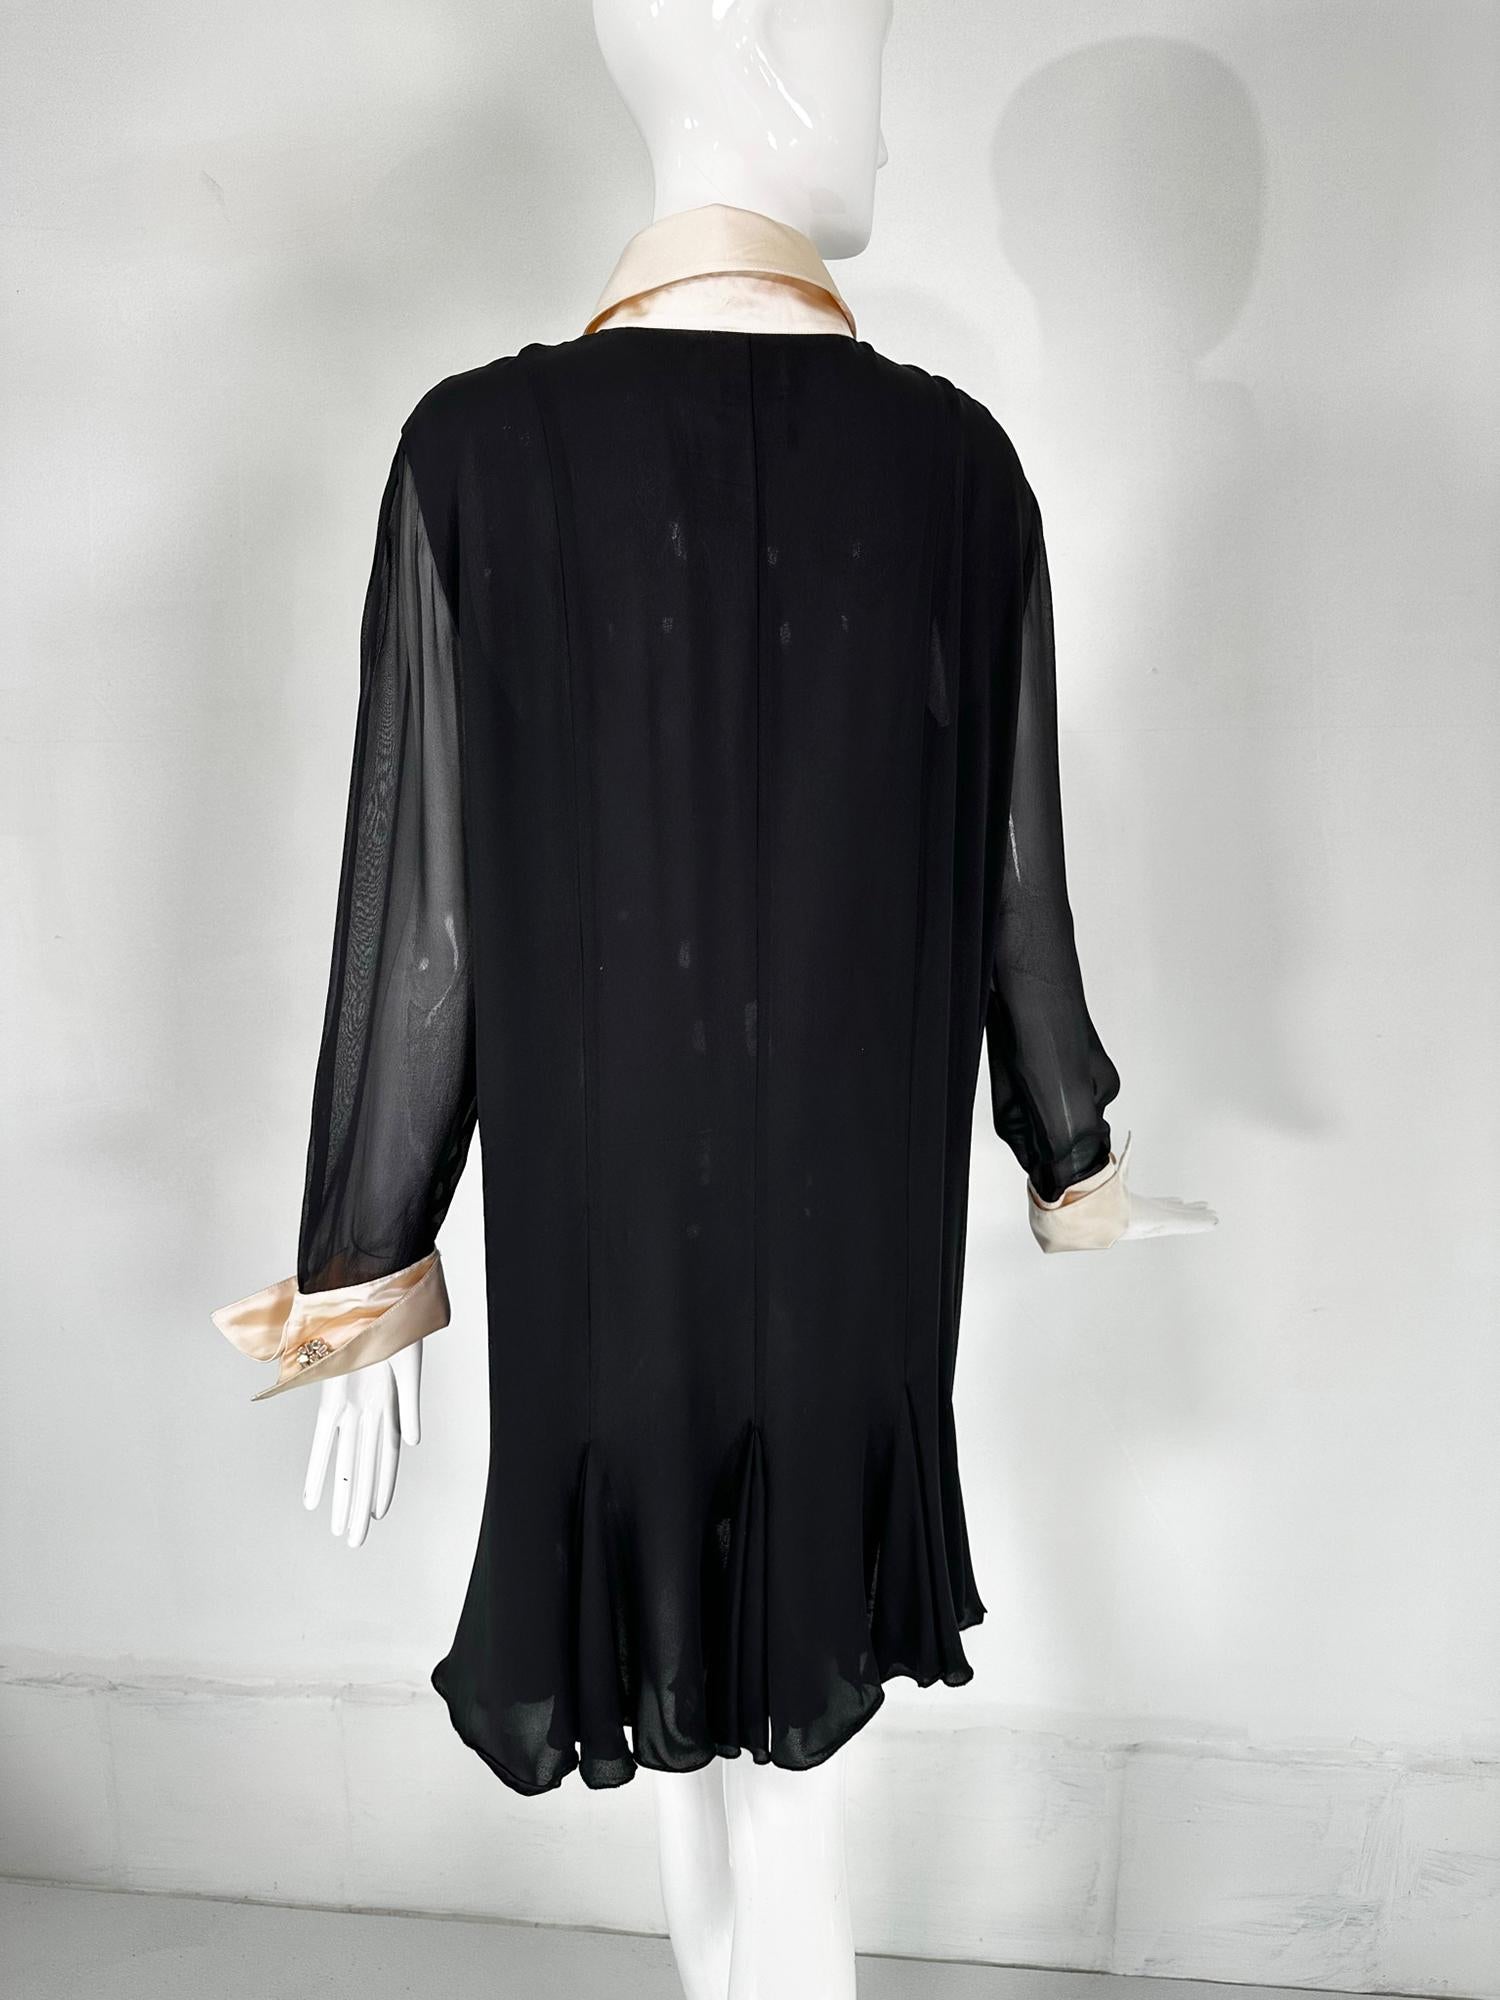 Christian Lacroix Black Silk Chiffon Dress With Off White Silk Collar & Cuffs  For Sale 1